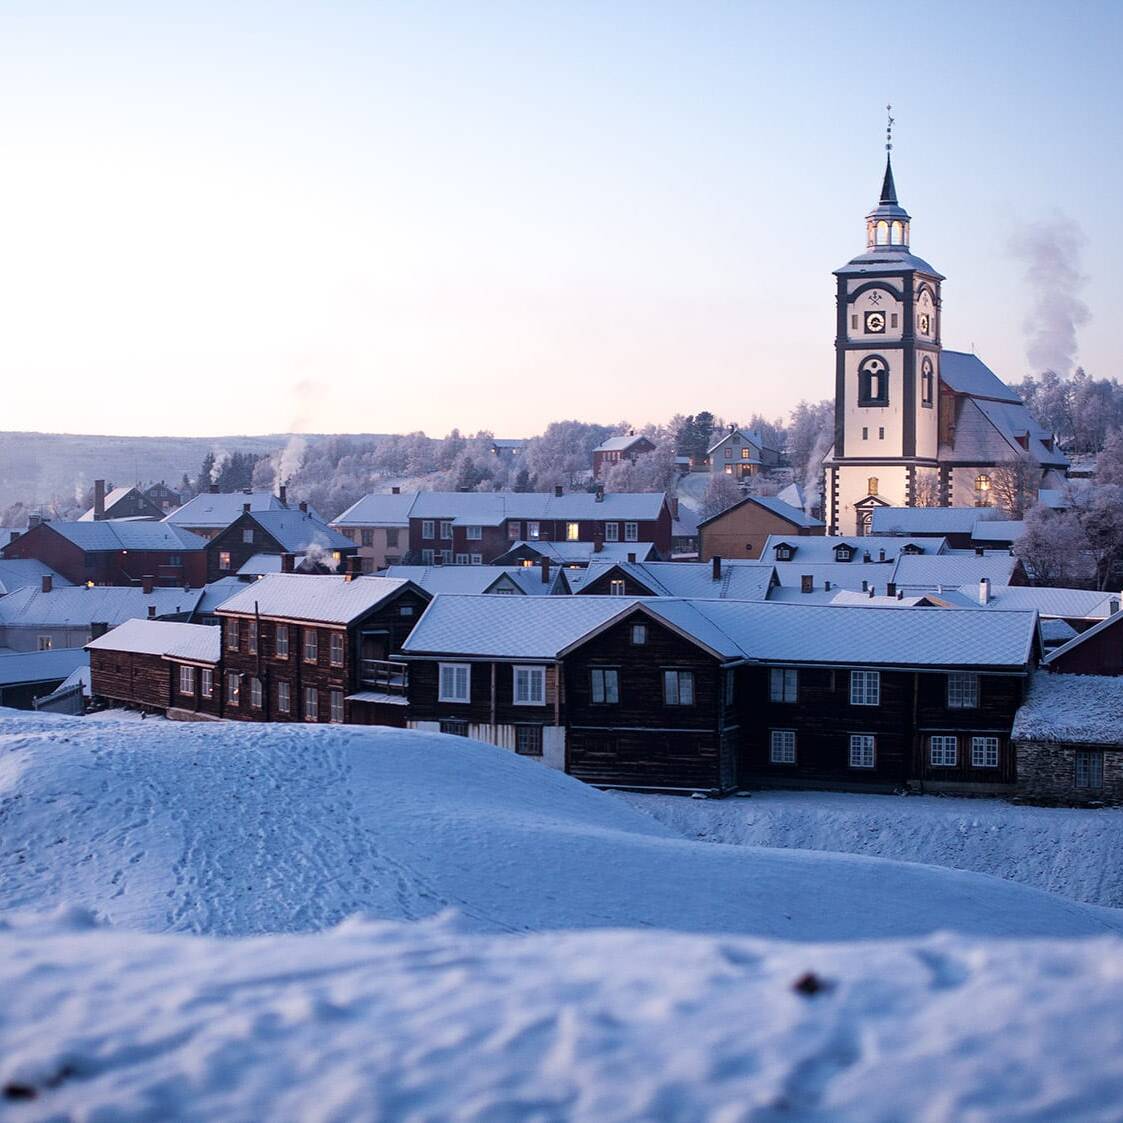 Vinterfestspill i Bergstaden. Foto: Maren Todal/Form til fjells